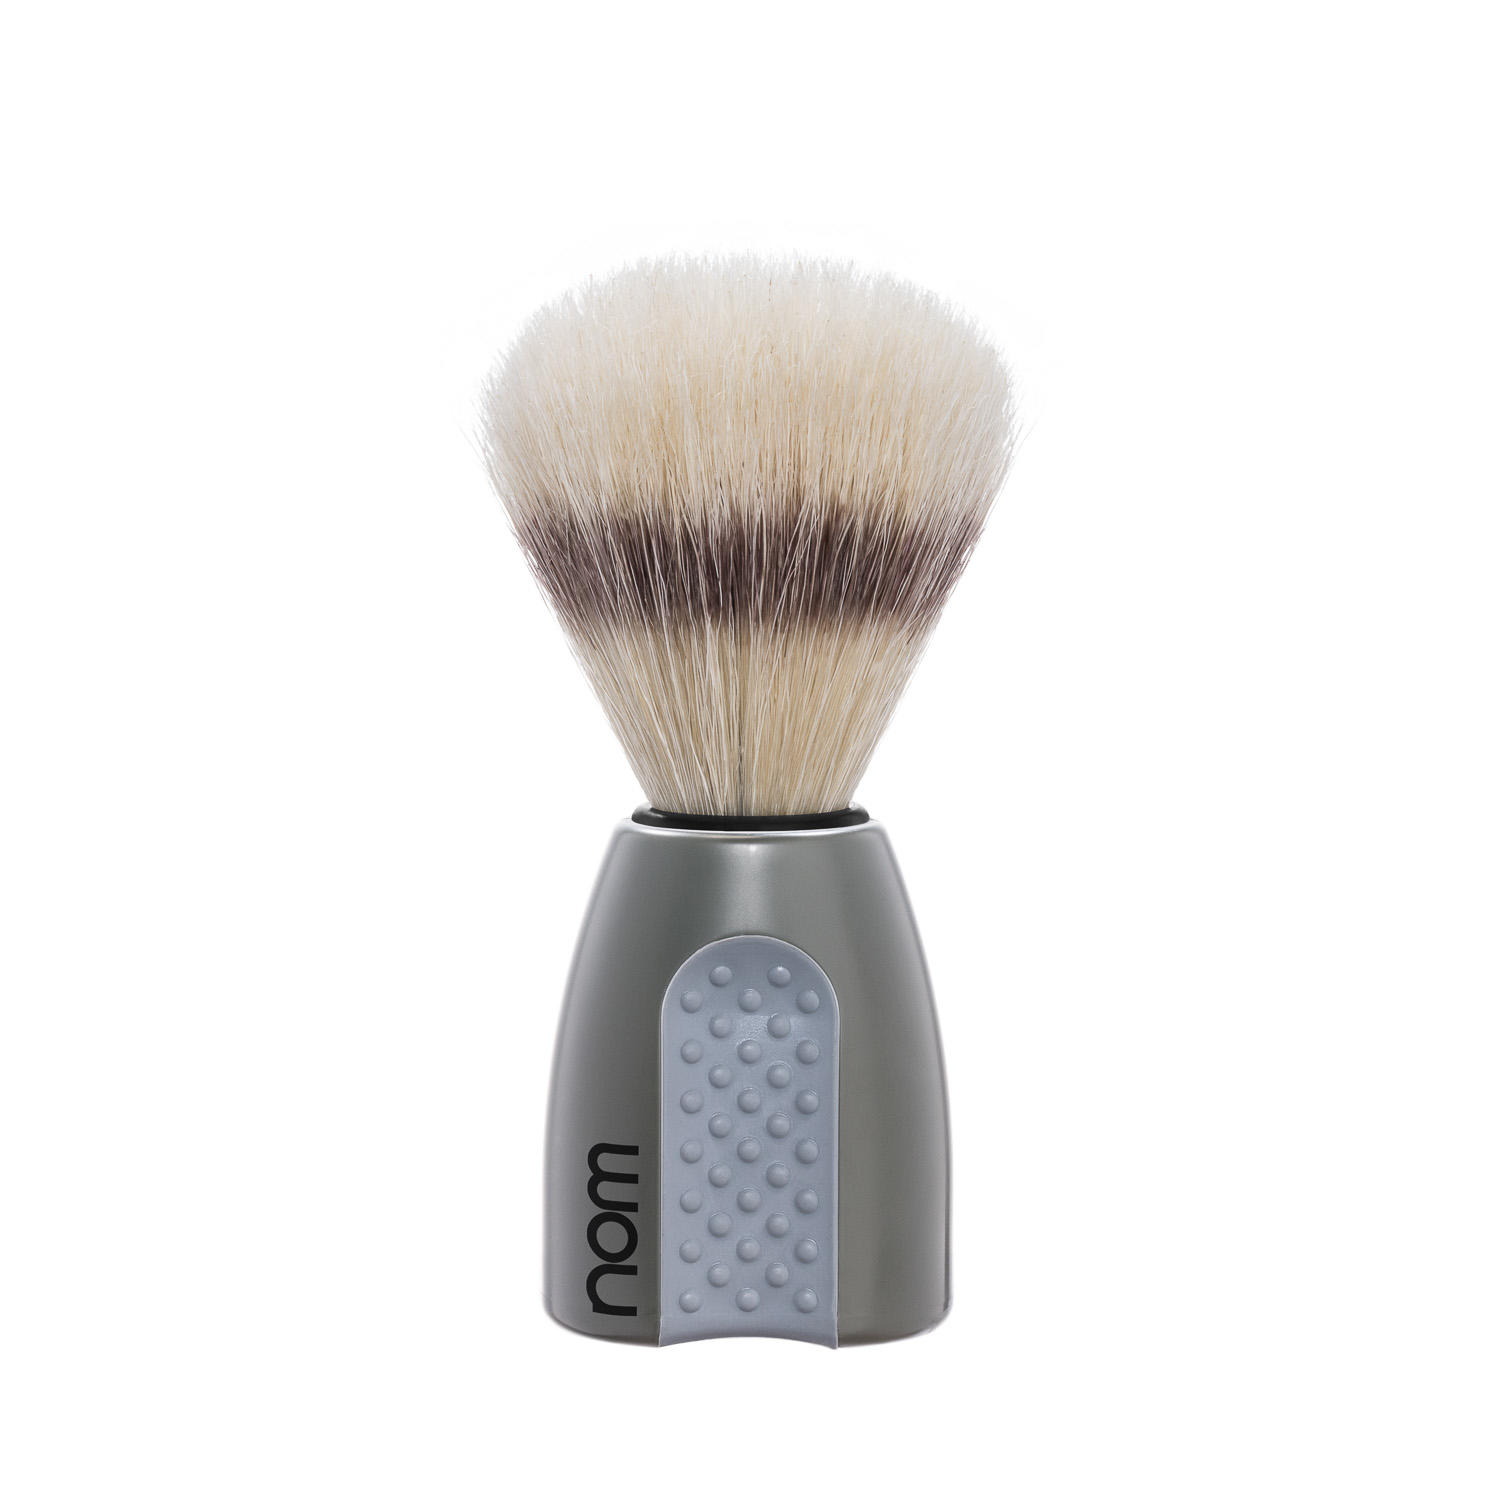 ERIK41GR NOM, ERIK grey, pure bristle shaving brush